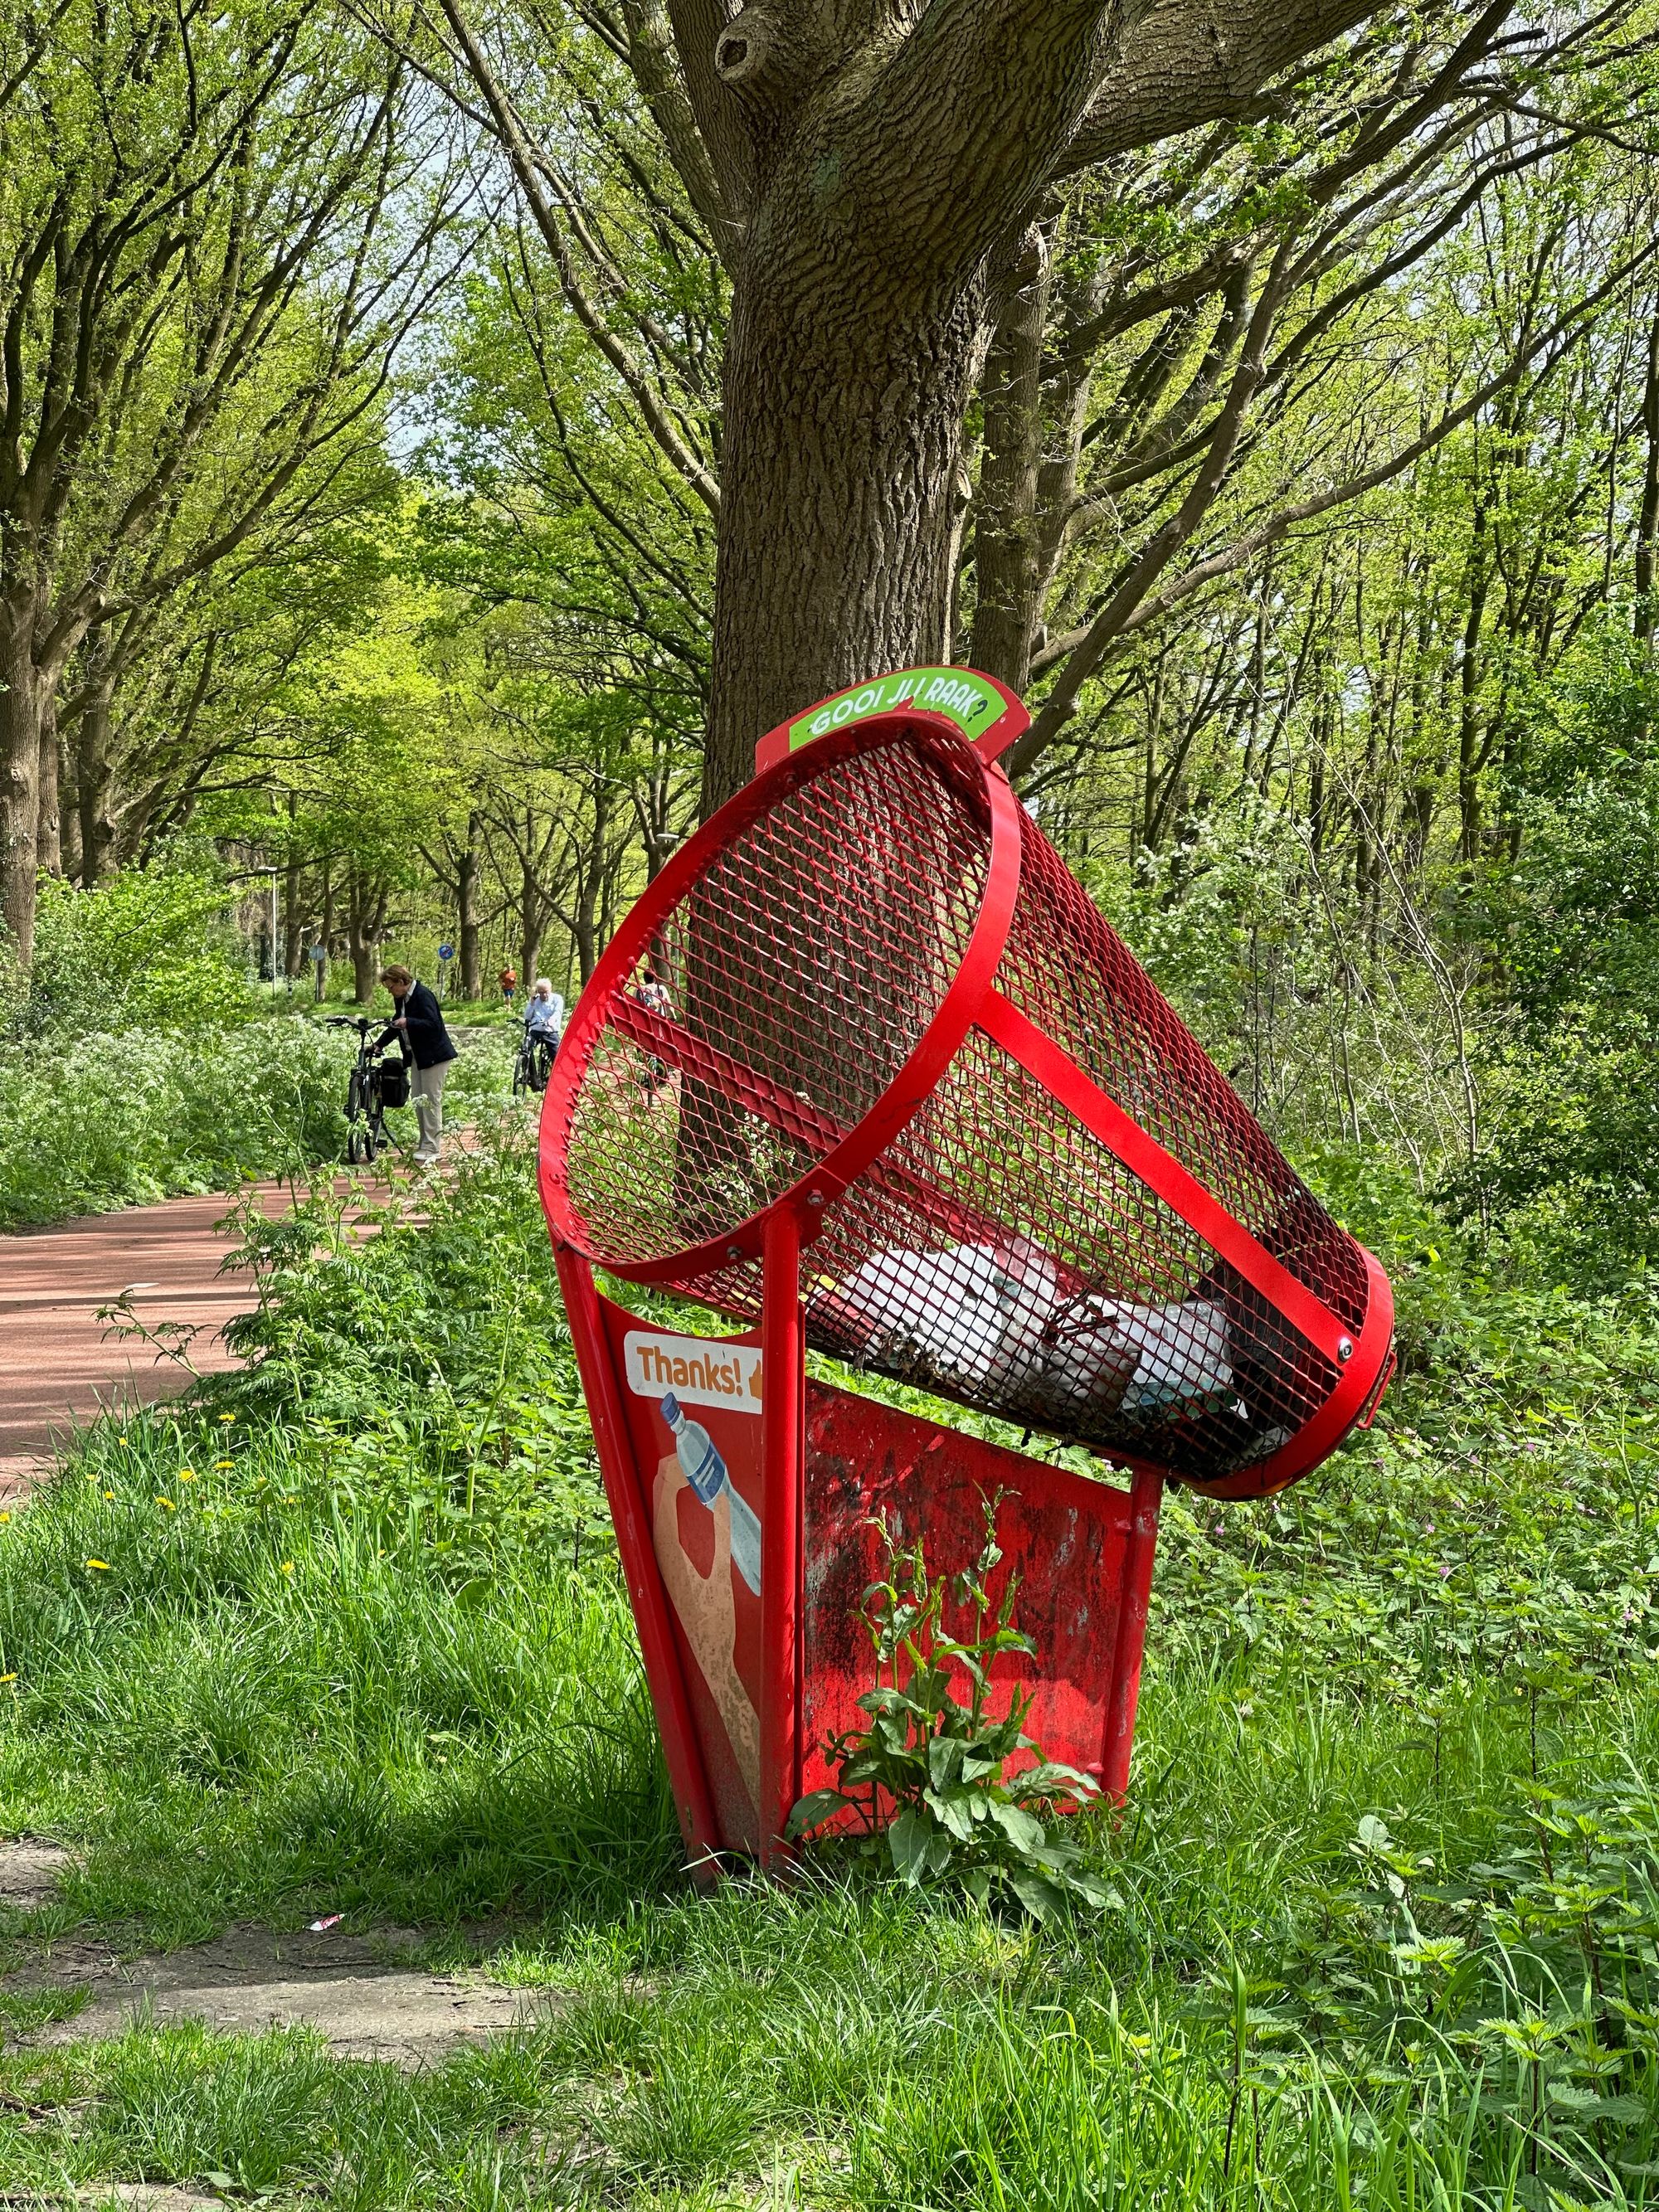 Dutch things: just throw your trash while biking